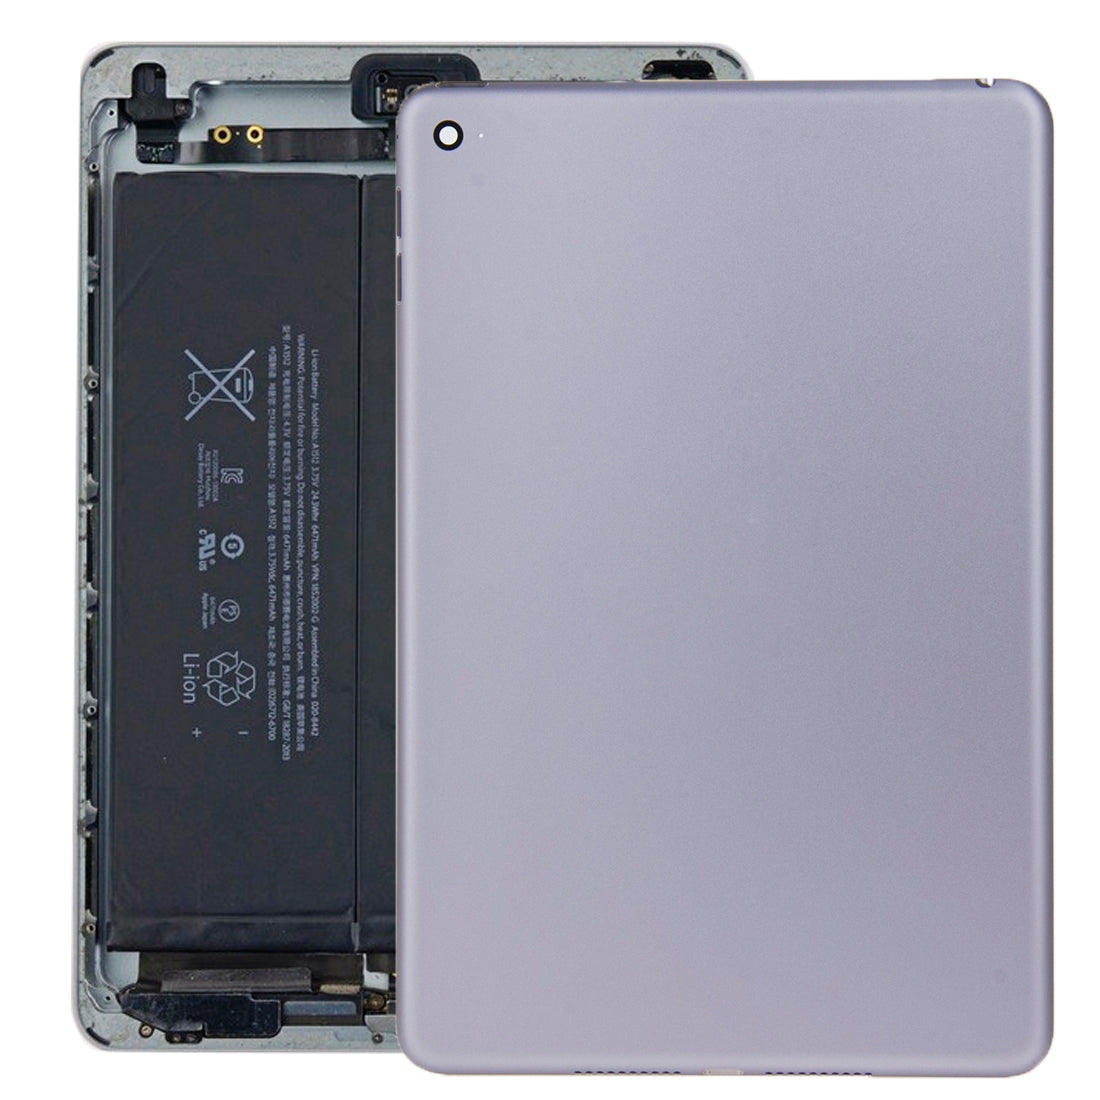 Battery Cover Back Cover Apple iPad Mini 4 WIFI version Gray